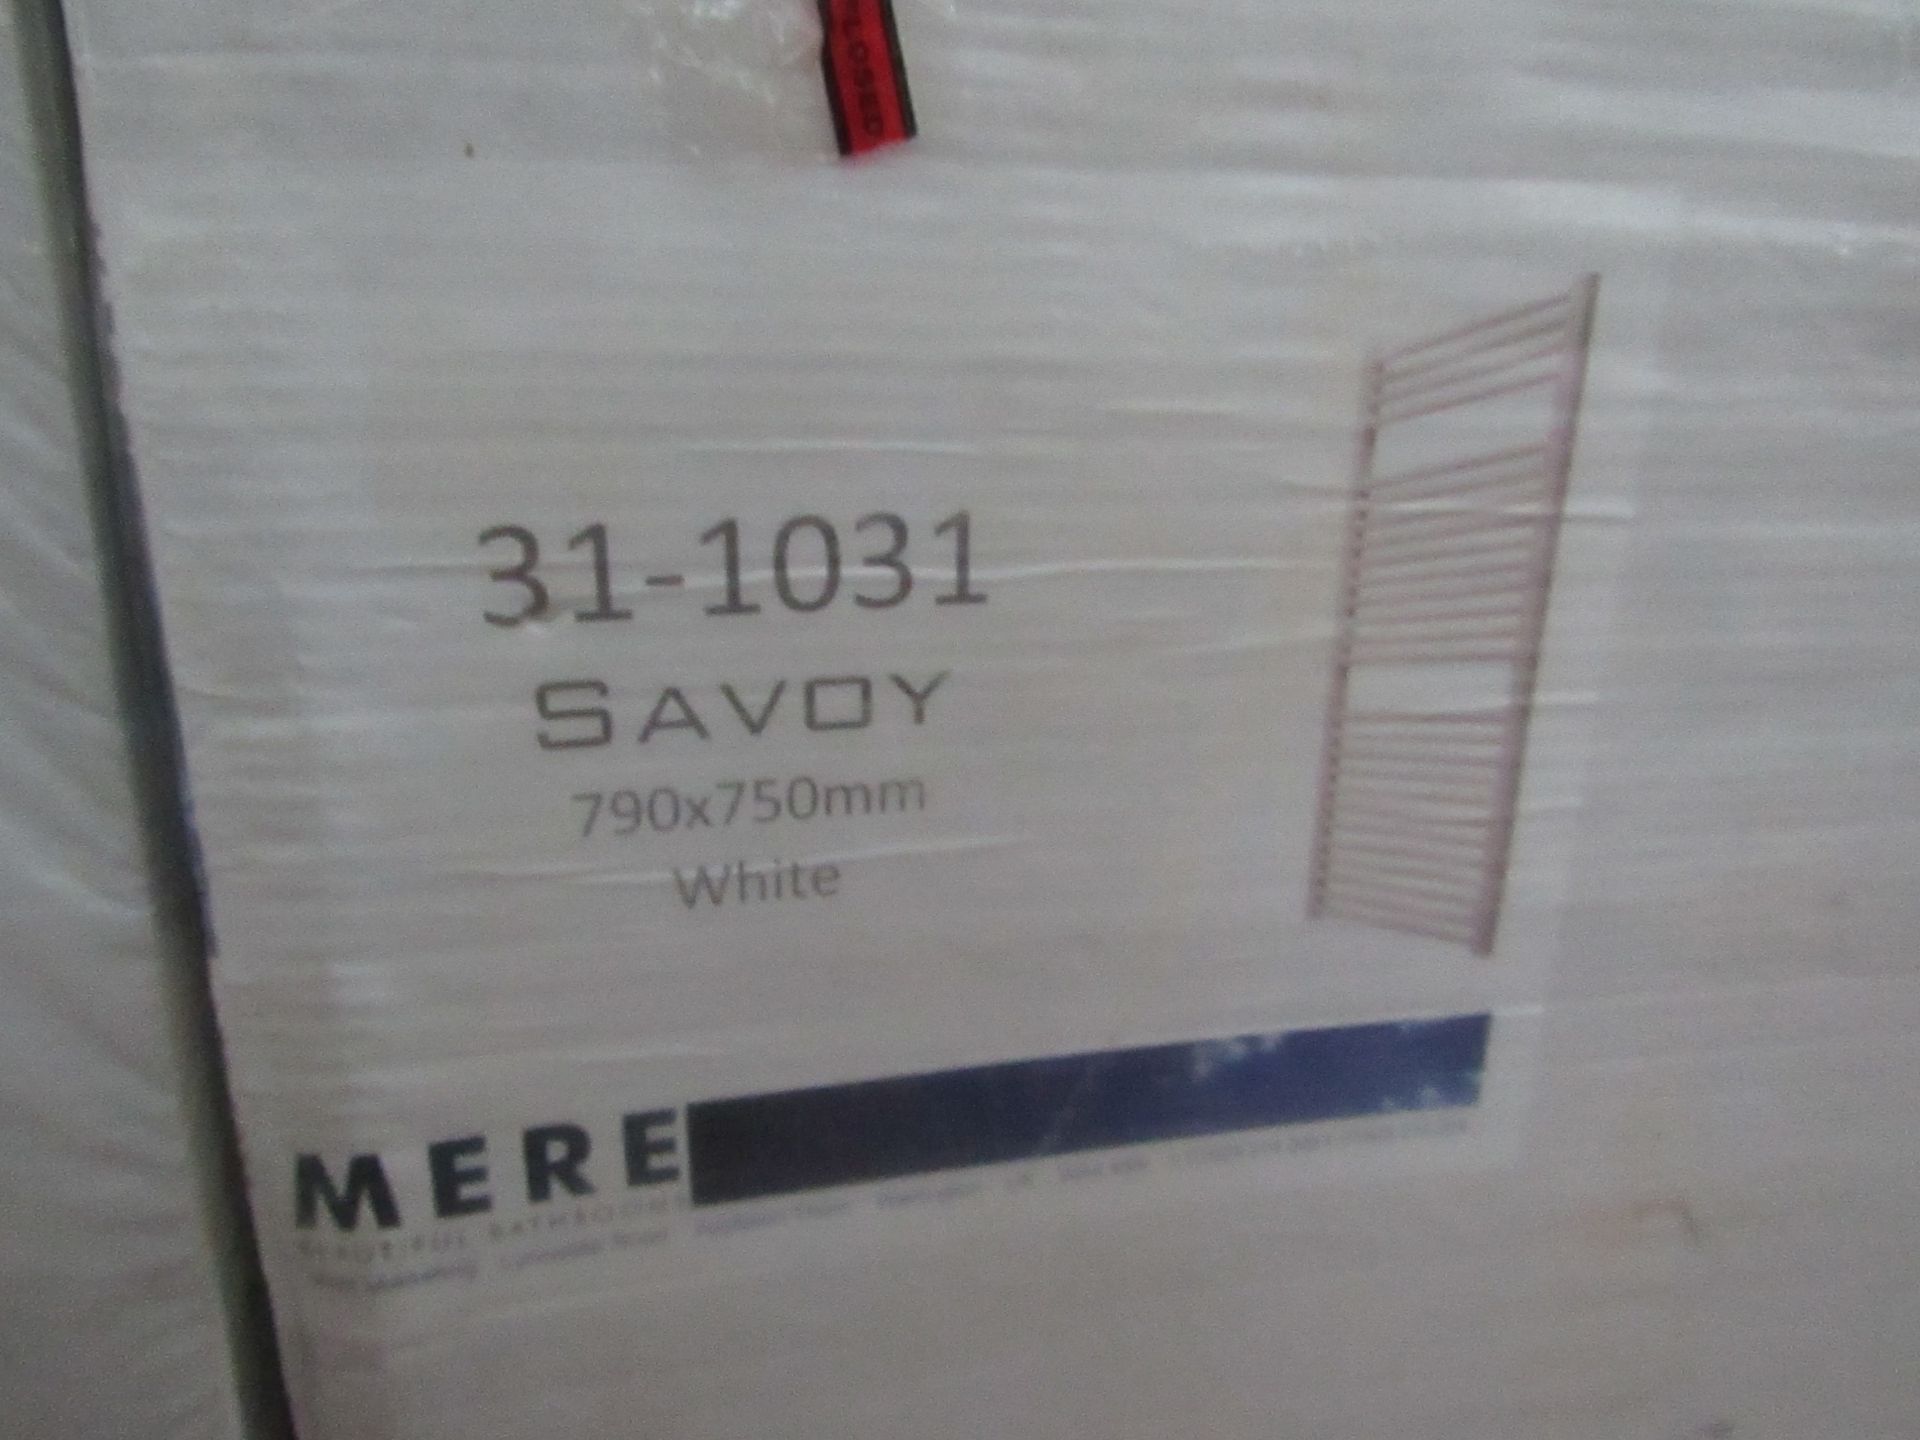 Mere Savoy 790x750mm White Towel Rail - New.